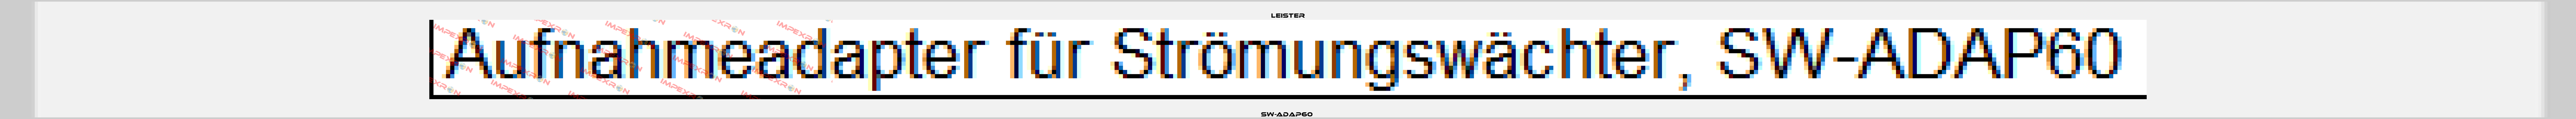 SW-ADAP60  Leister